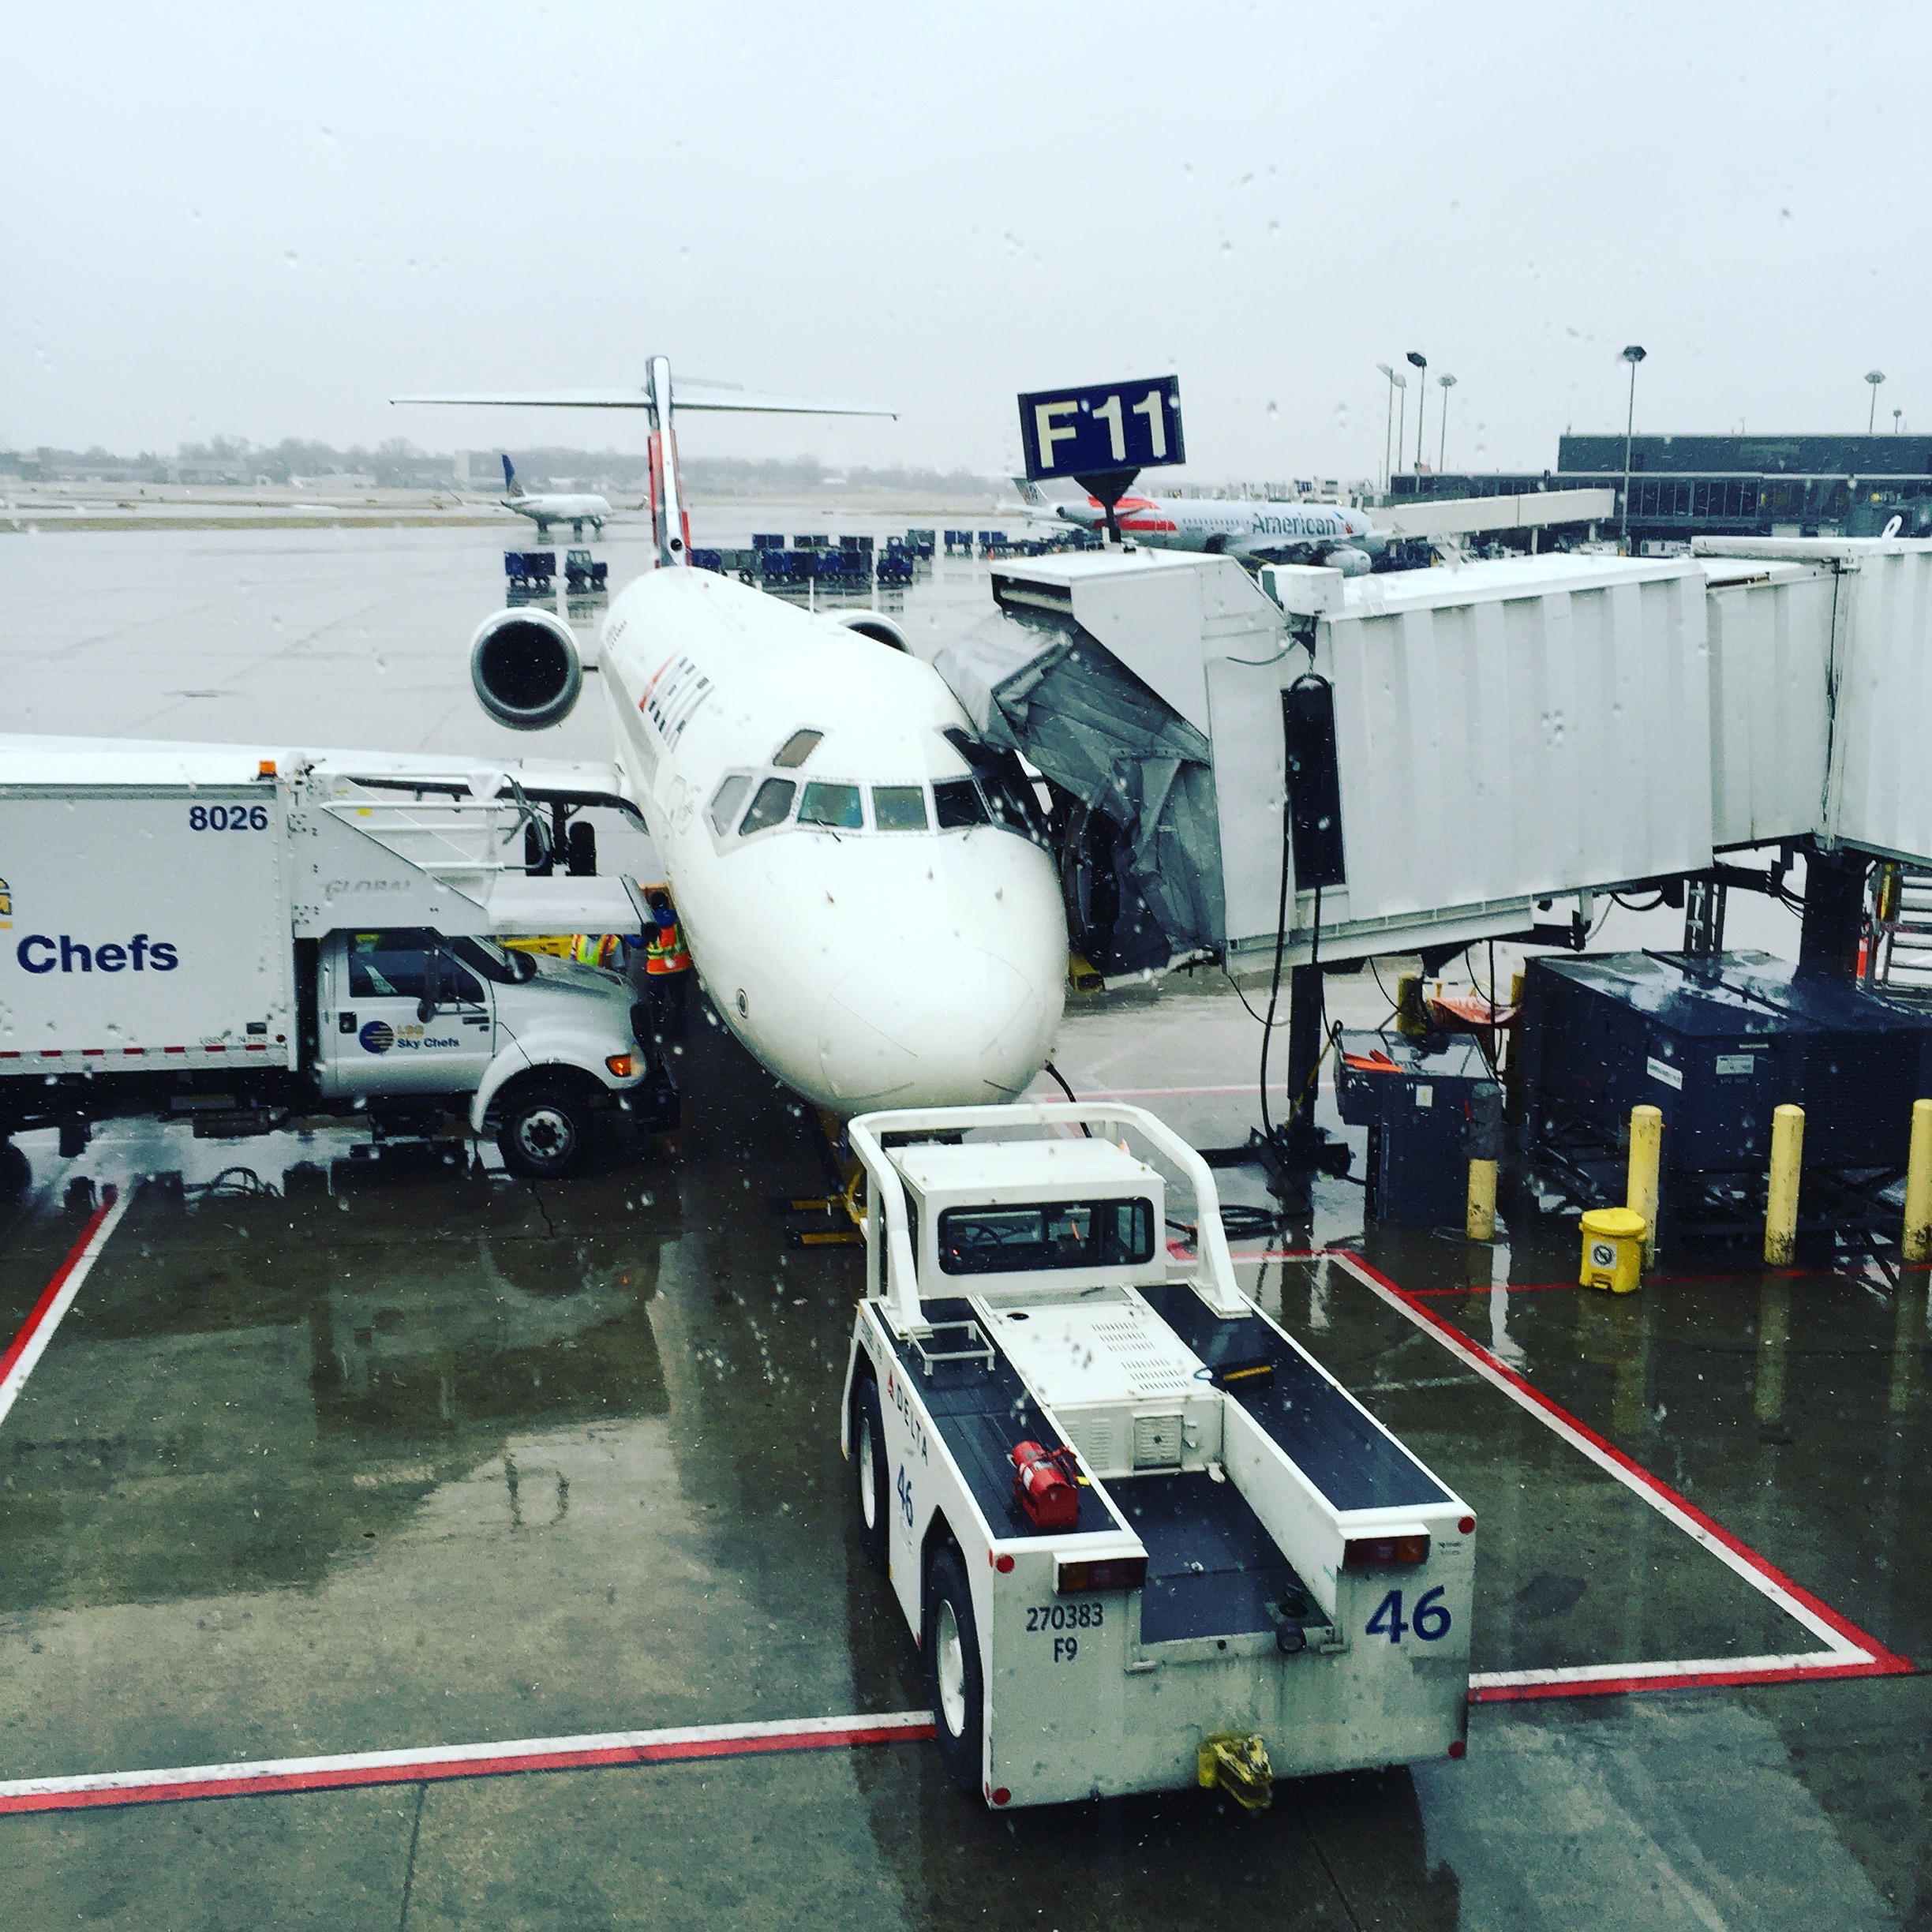 Trip Report – Delta – Minneapolis to Detroit